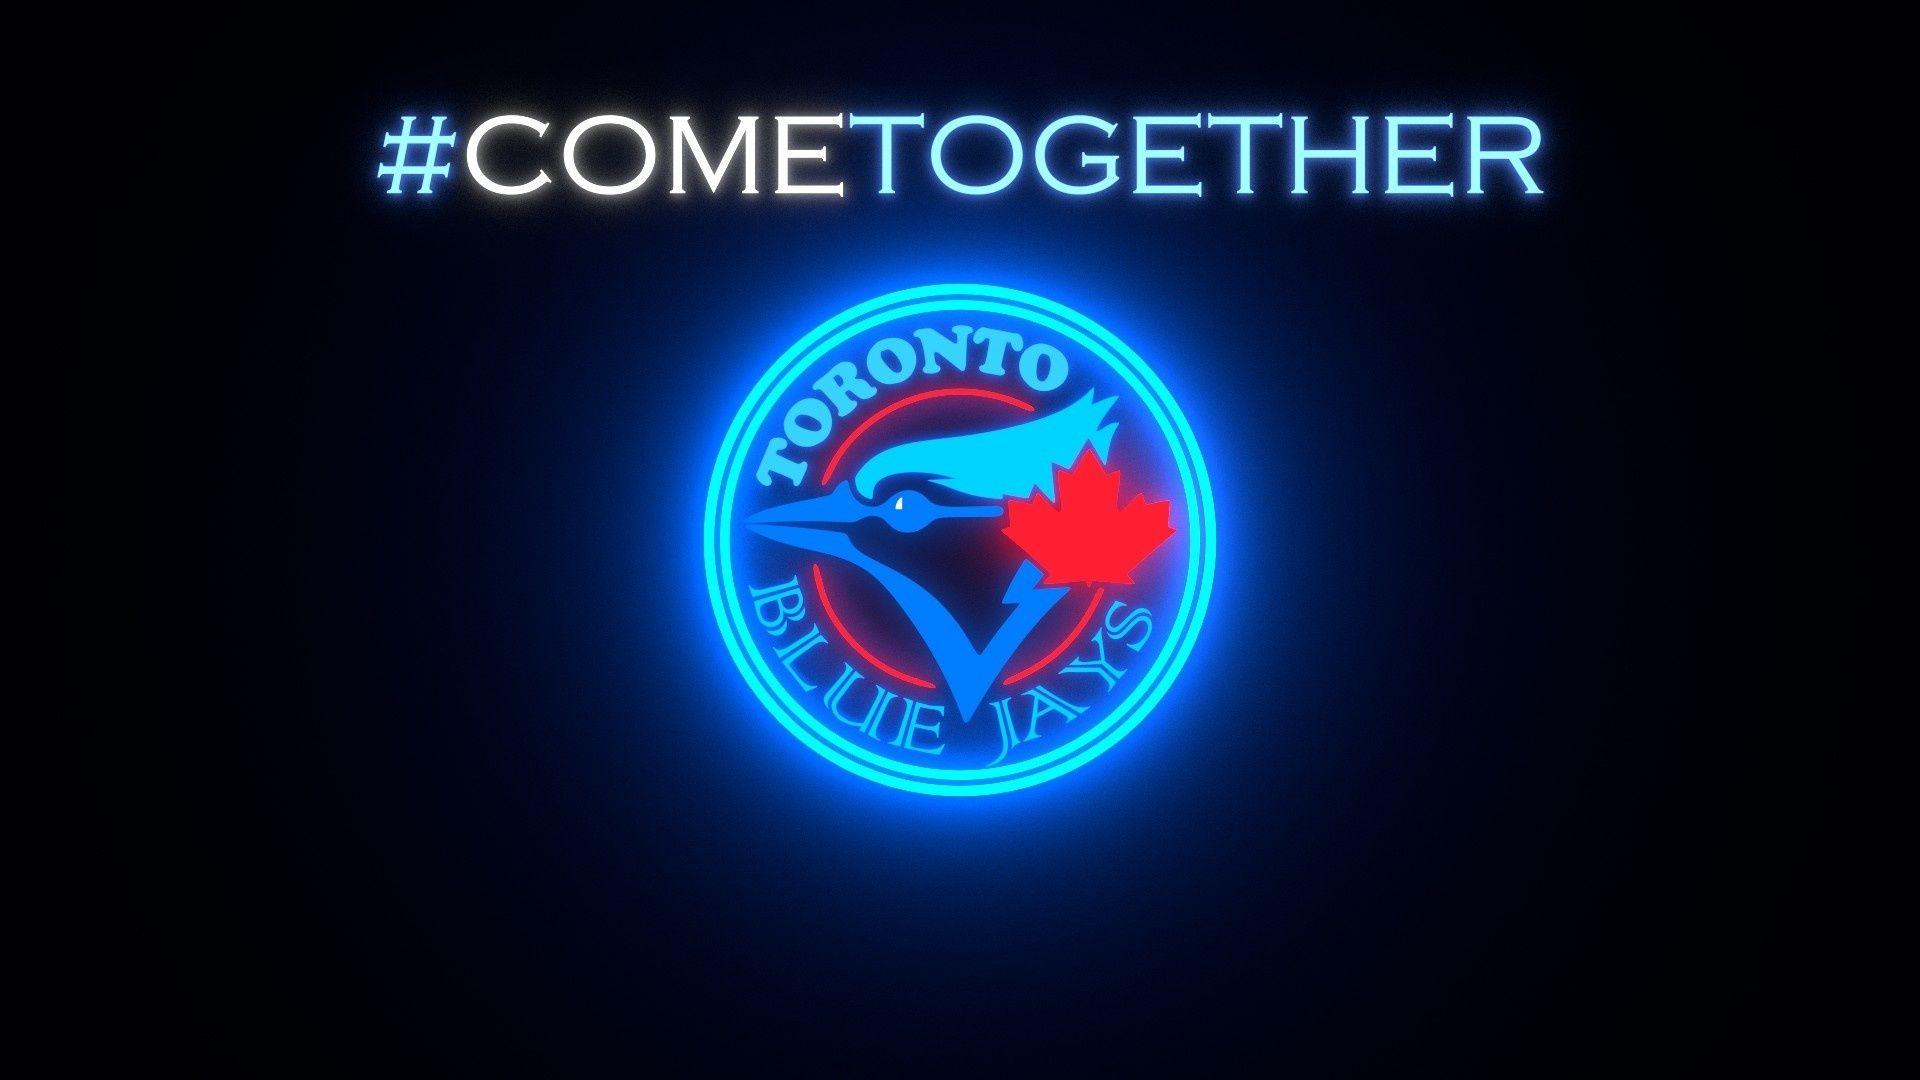 Blue Jay Sports Logo - Toronto Blue Jays image Toronto Blue Jays Together HD